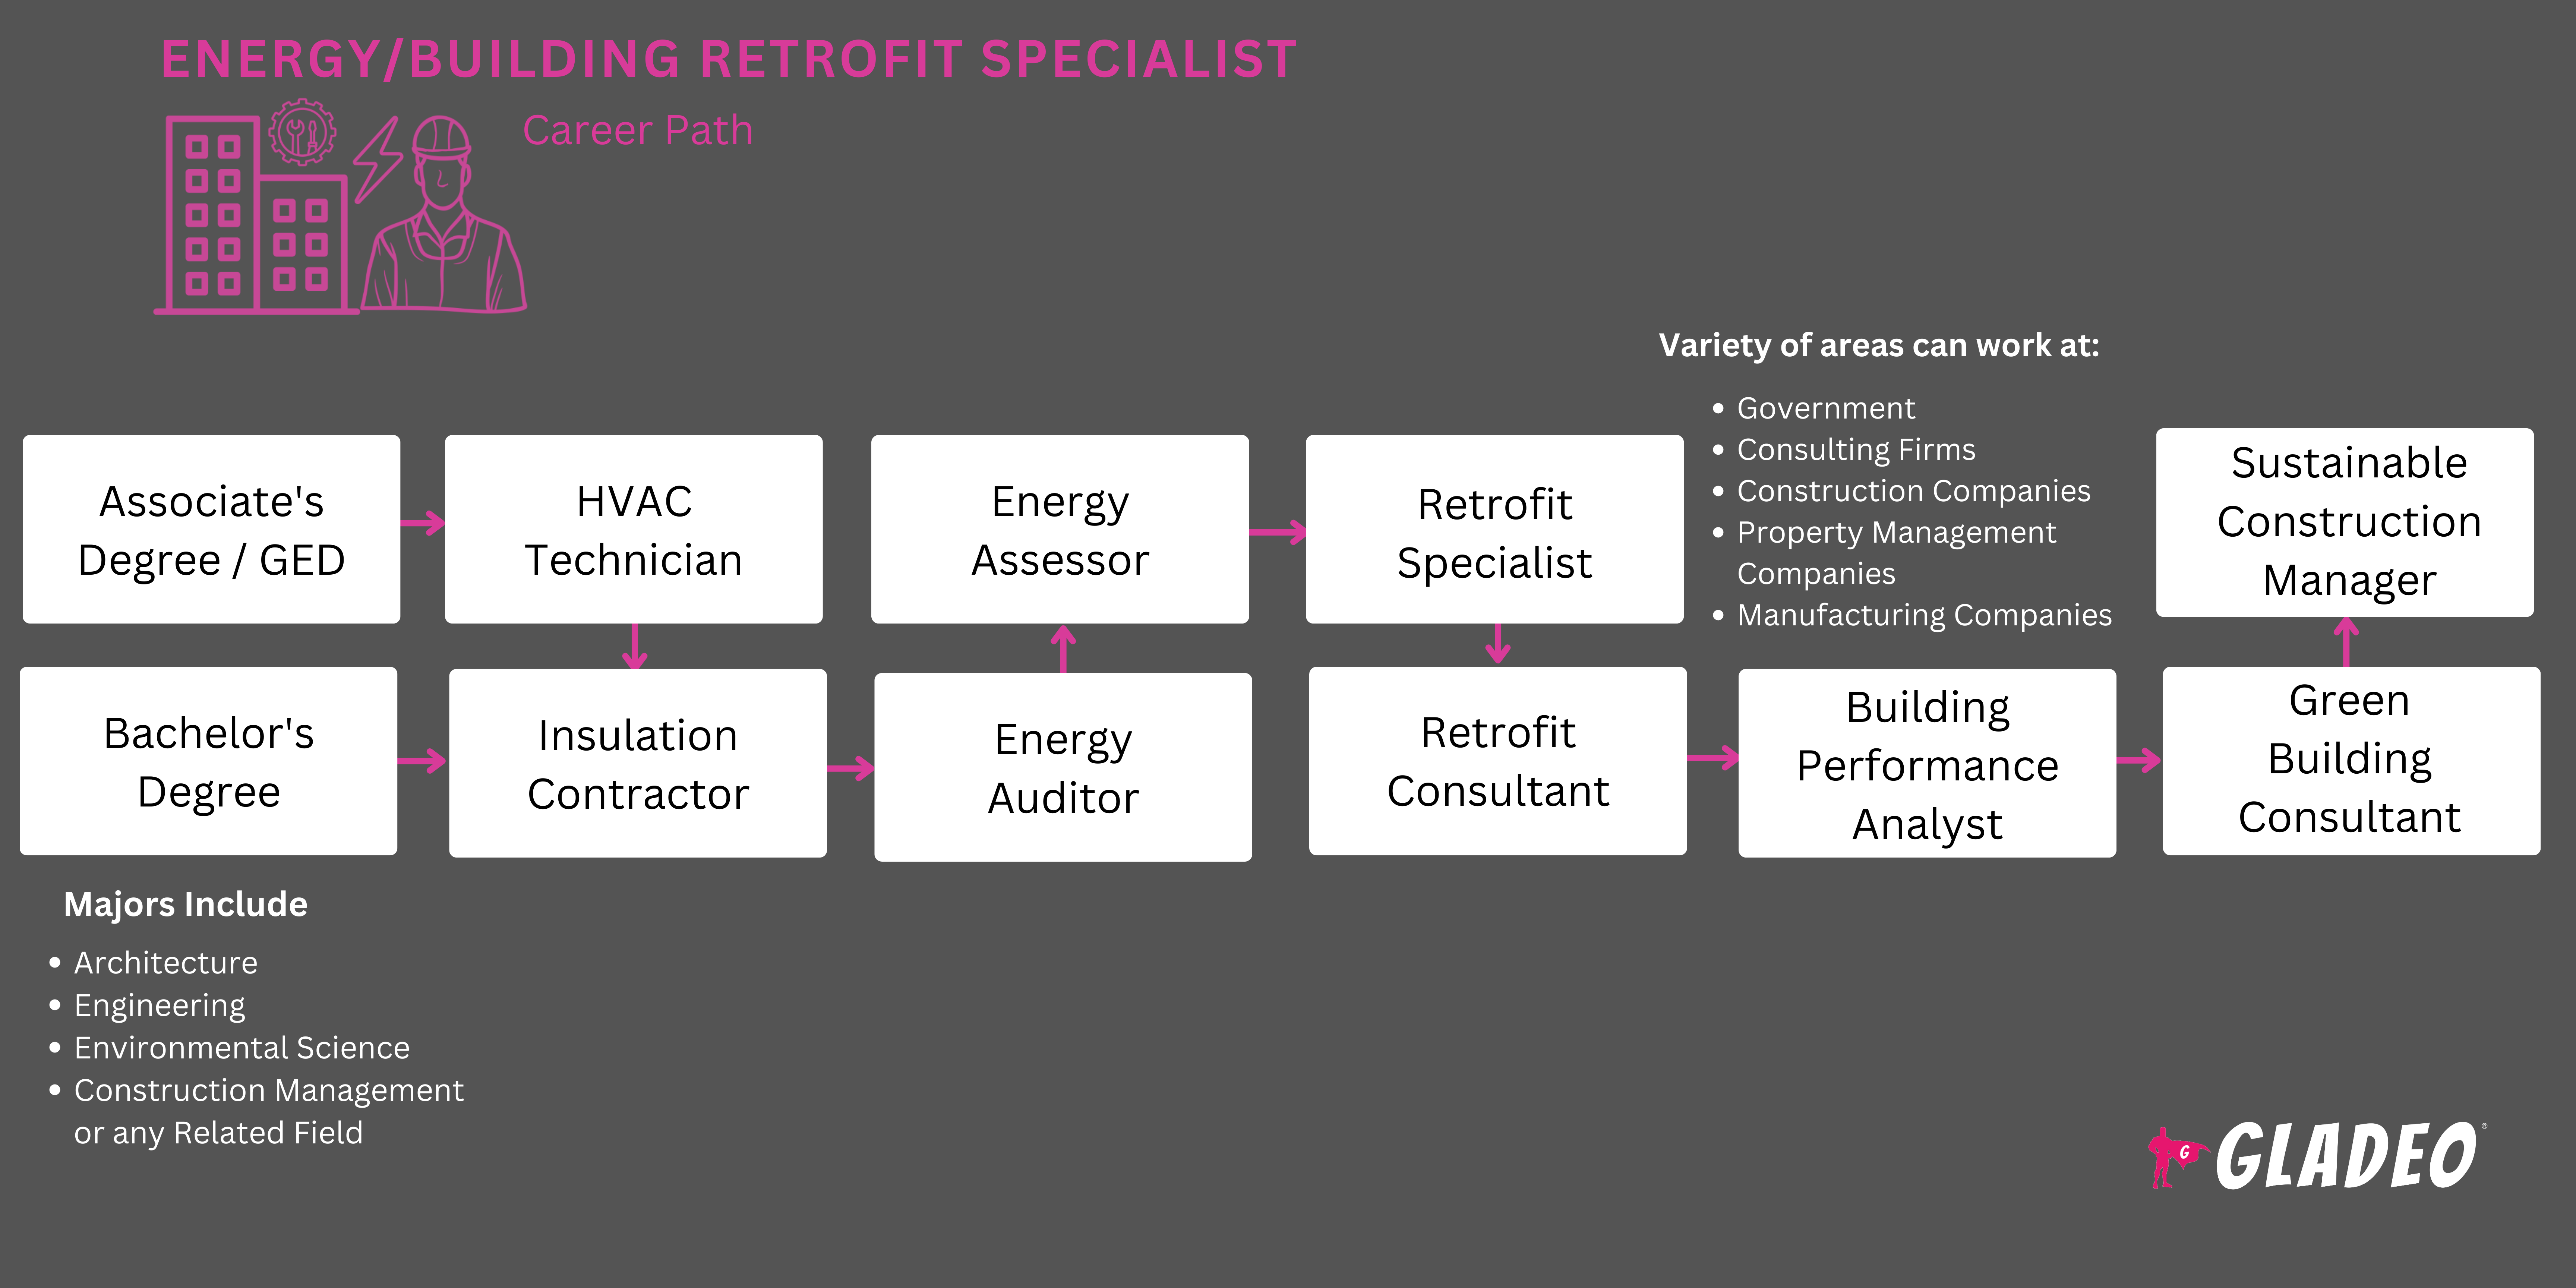 Energy/Building Retrofit Specialist